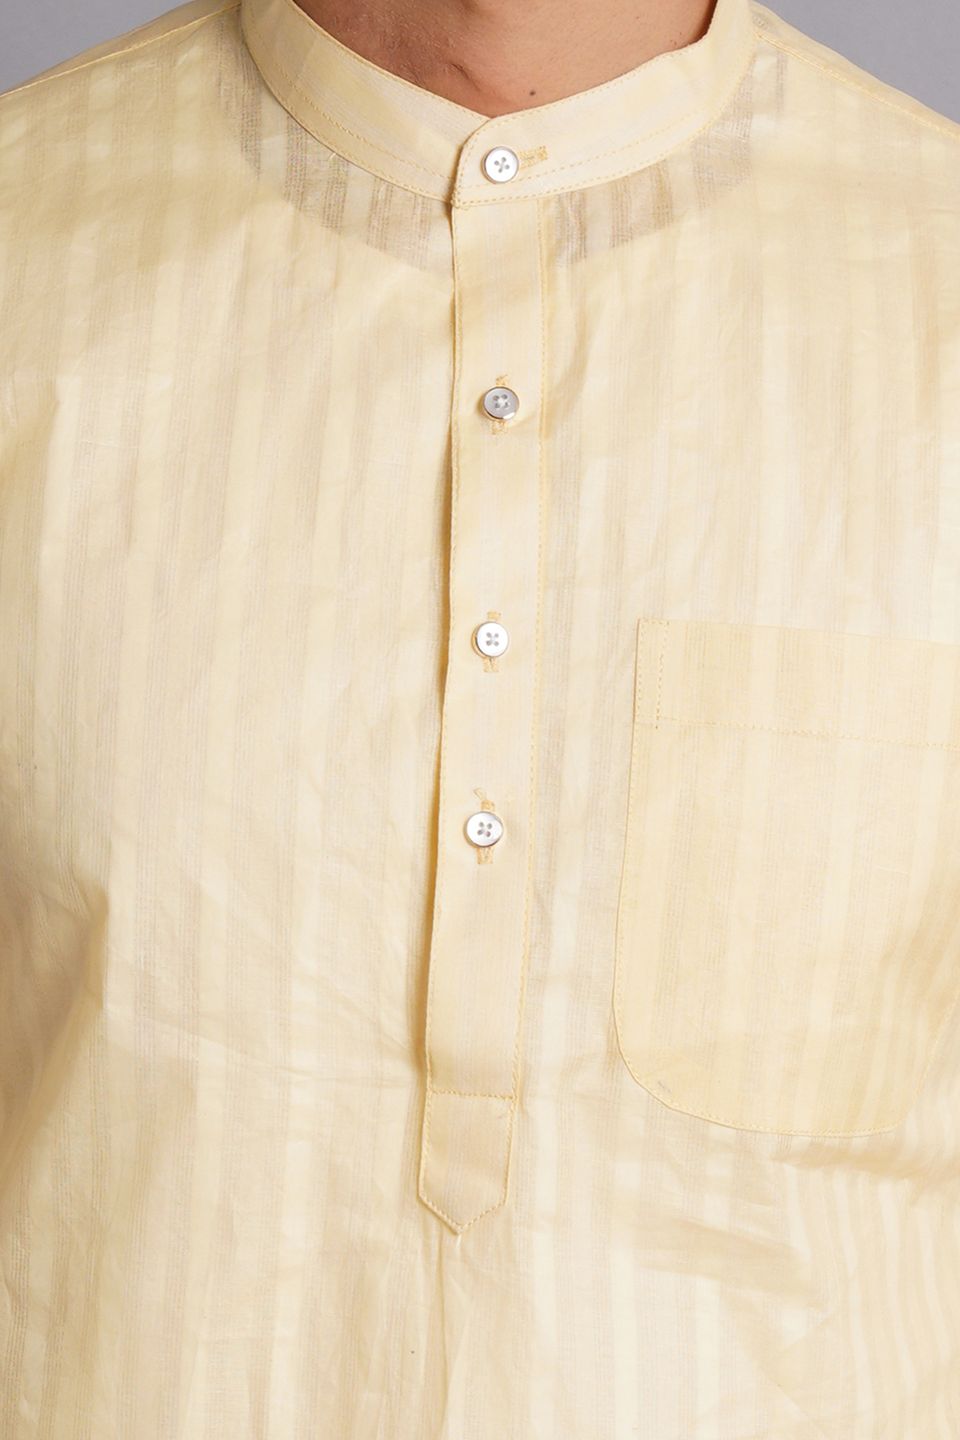 Cotton Yellow Striped Long Kurta Pajama